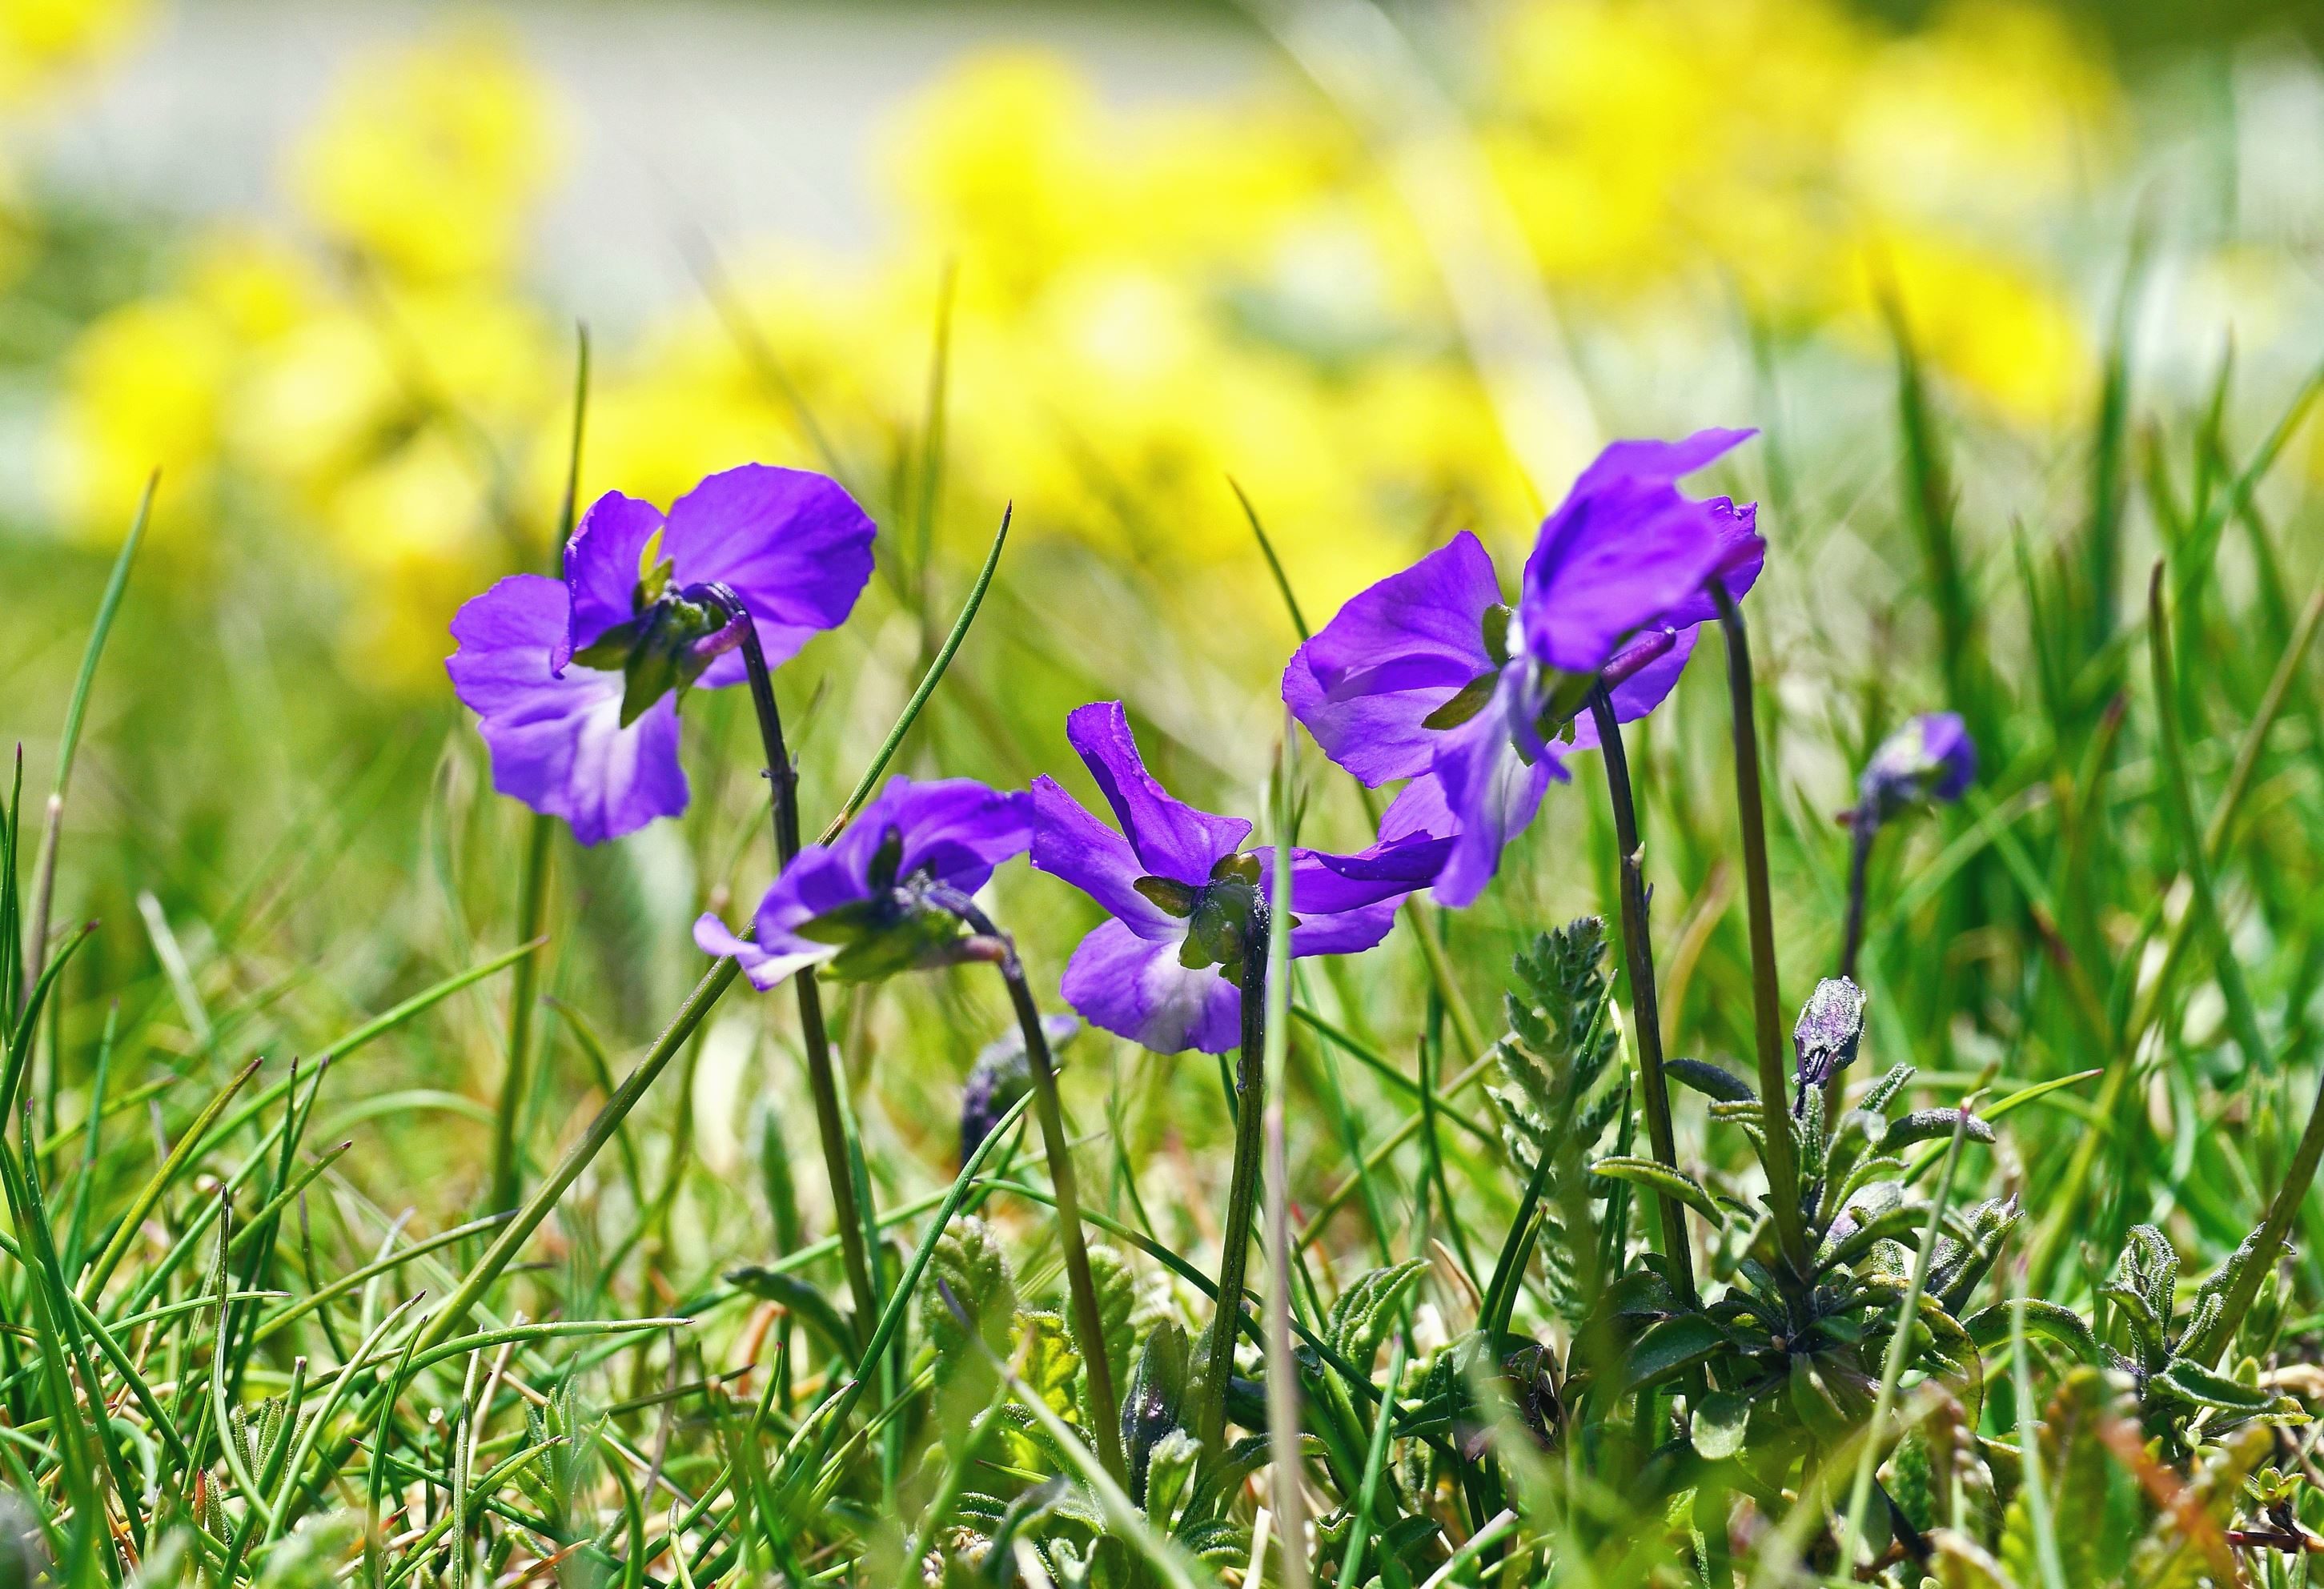 Imagen gratis: Flor, violeta, flor, pétalos, planta, flora, pasto o césped